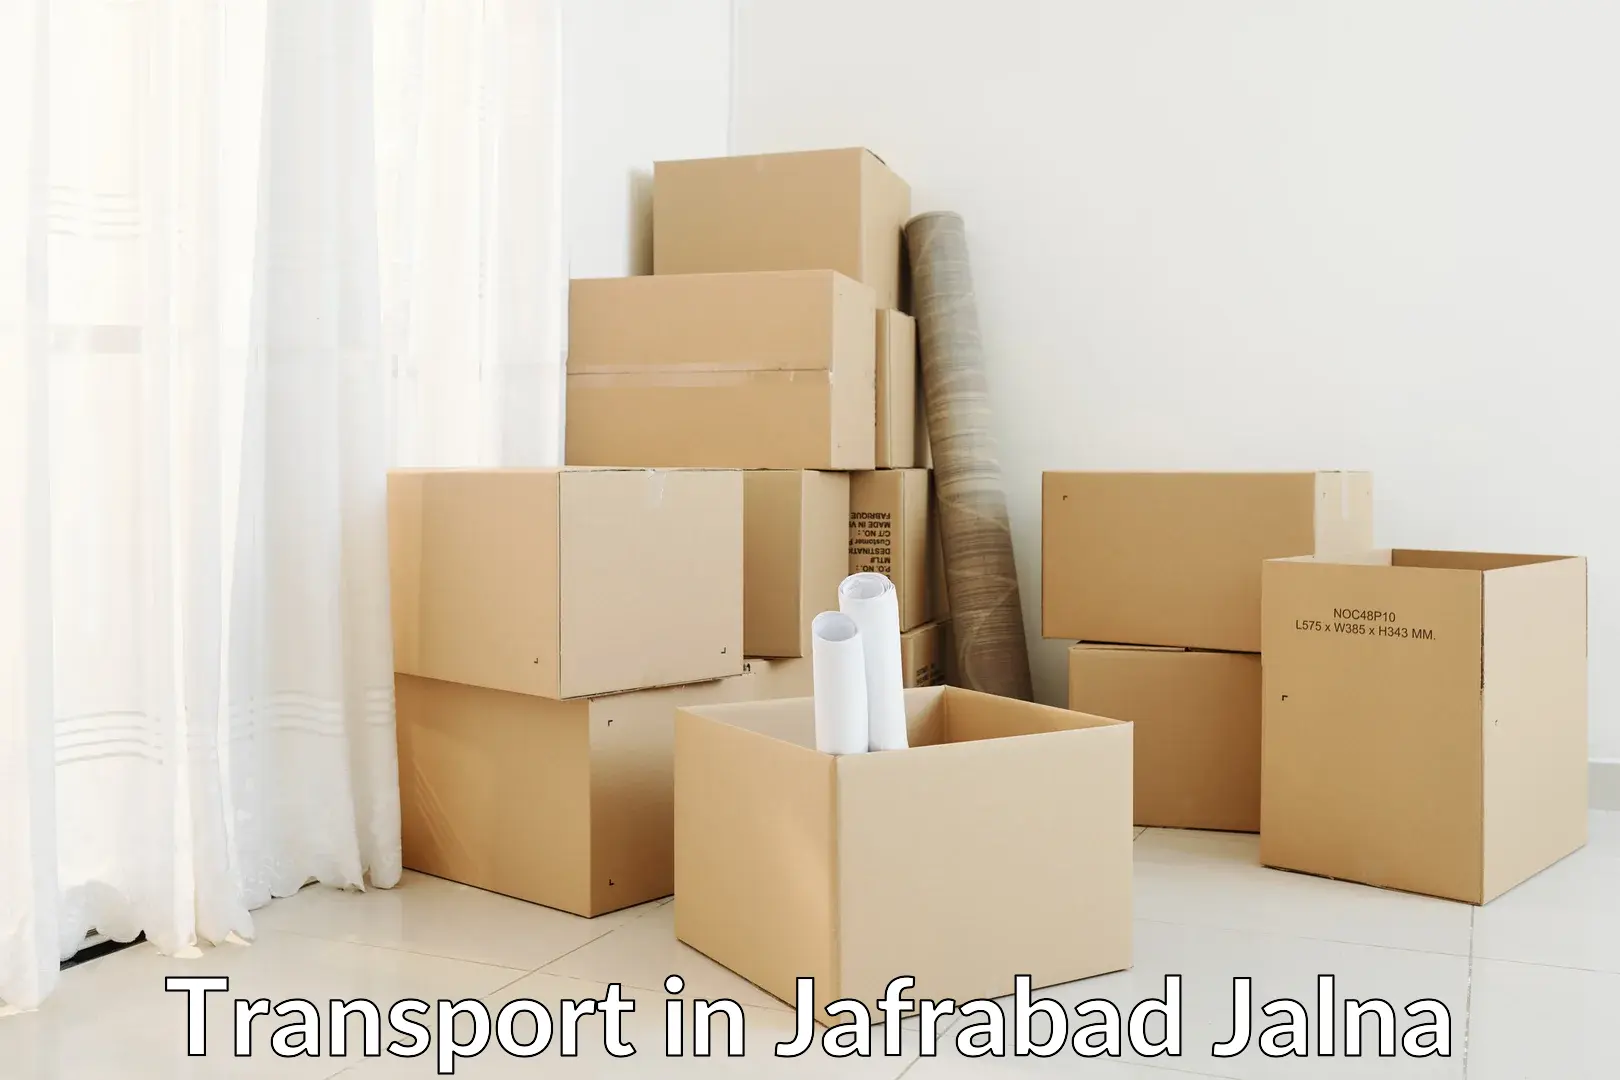 Daily transport service in Jafrabad Jalna